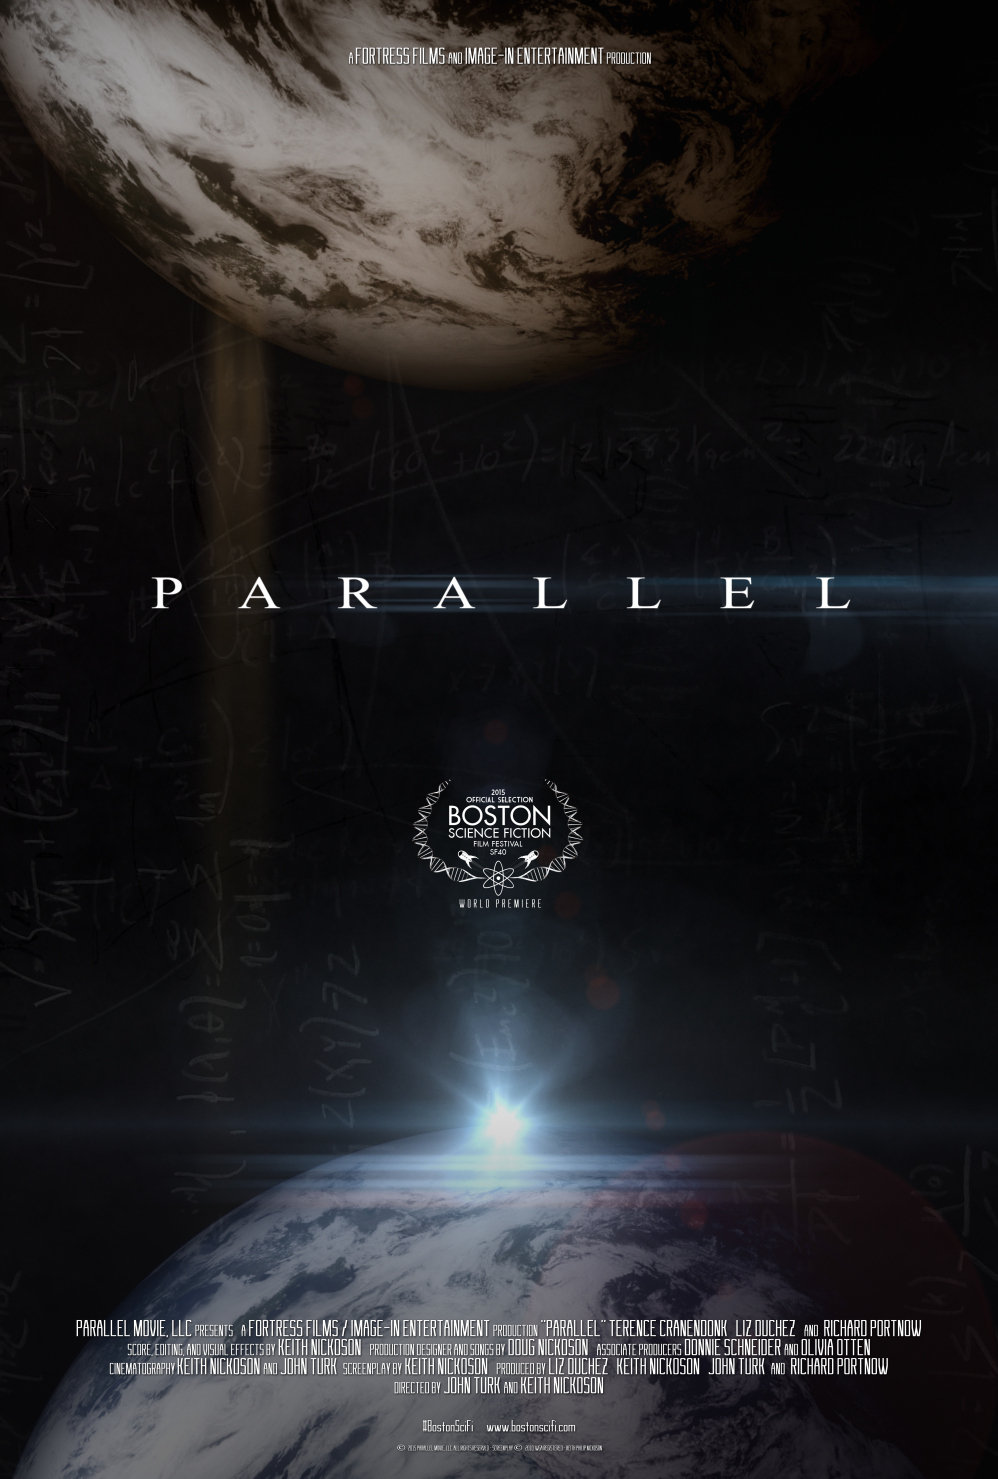 Parallels (2015)